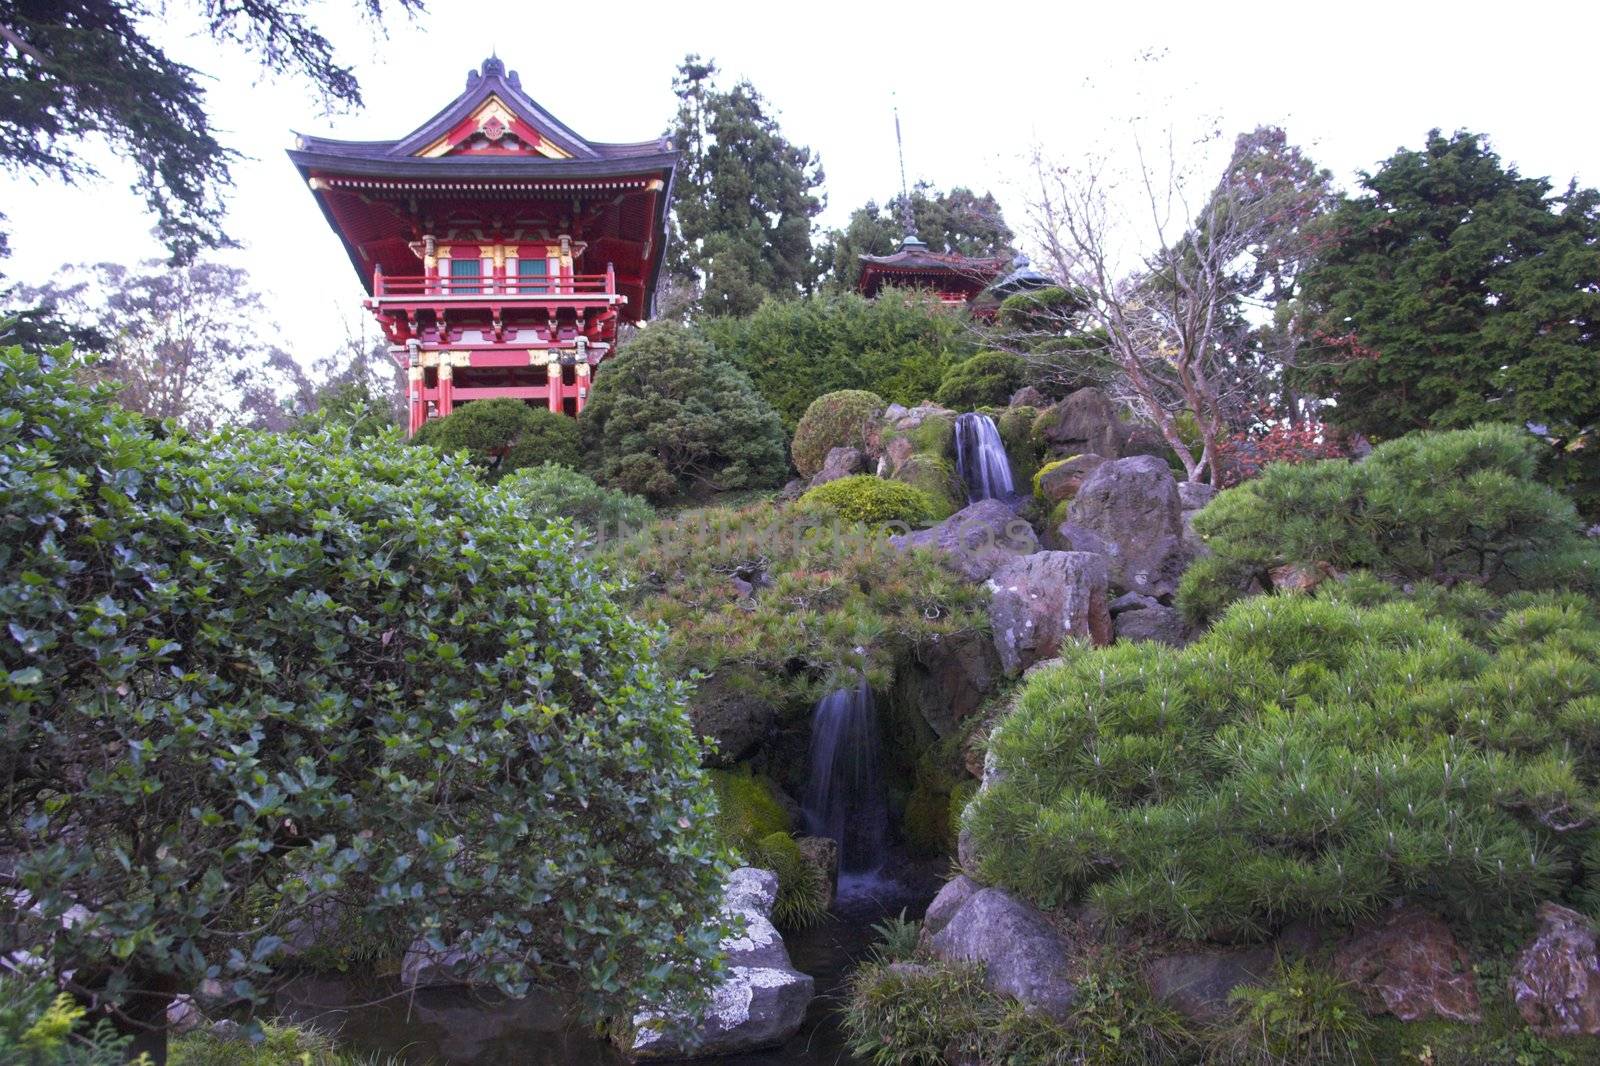 Red pagoda in Japanese garden in San Francisco, California